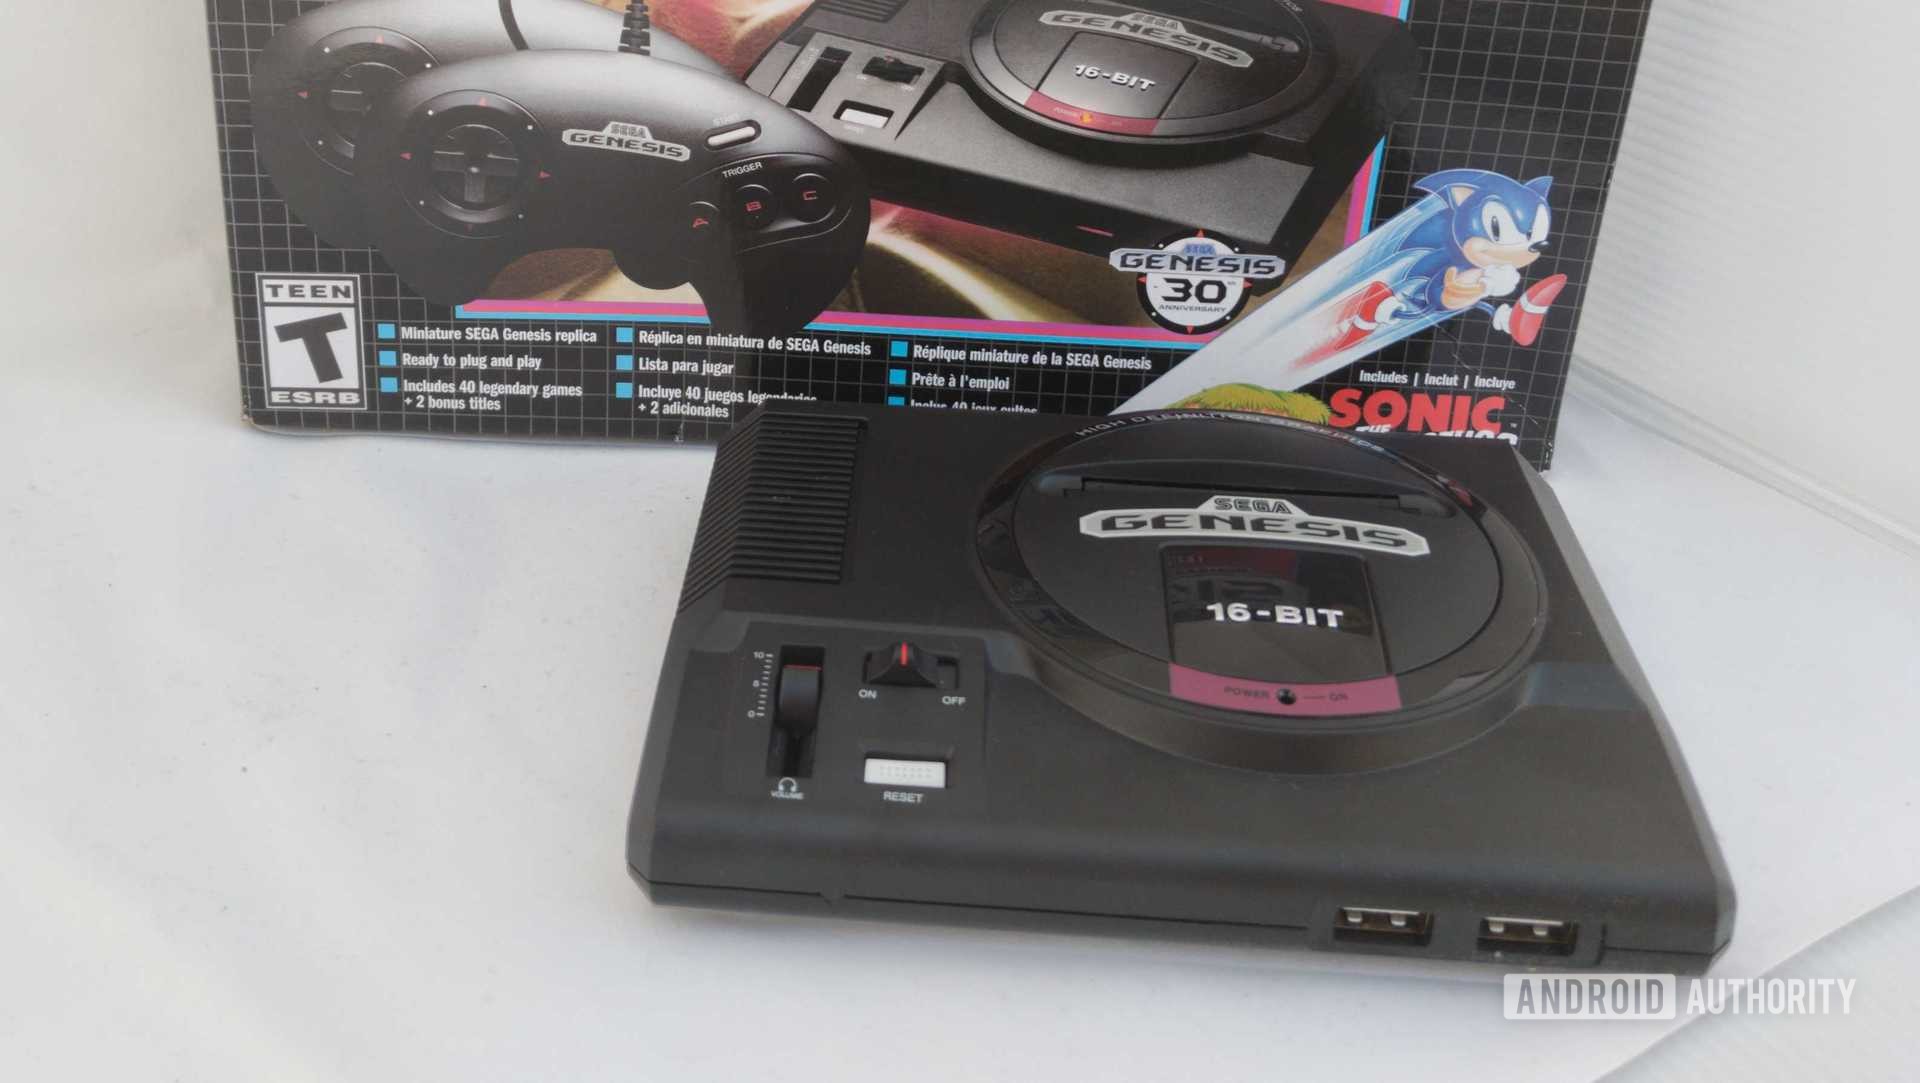 Sega Genesis Mini review: The best retro console for everyone who